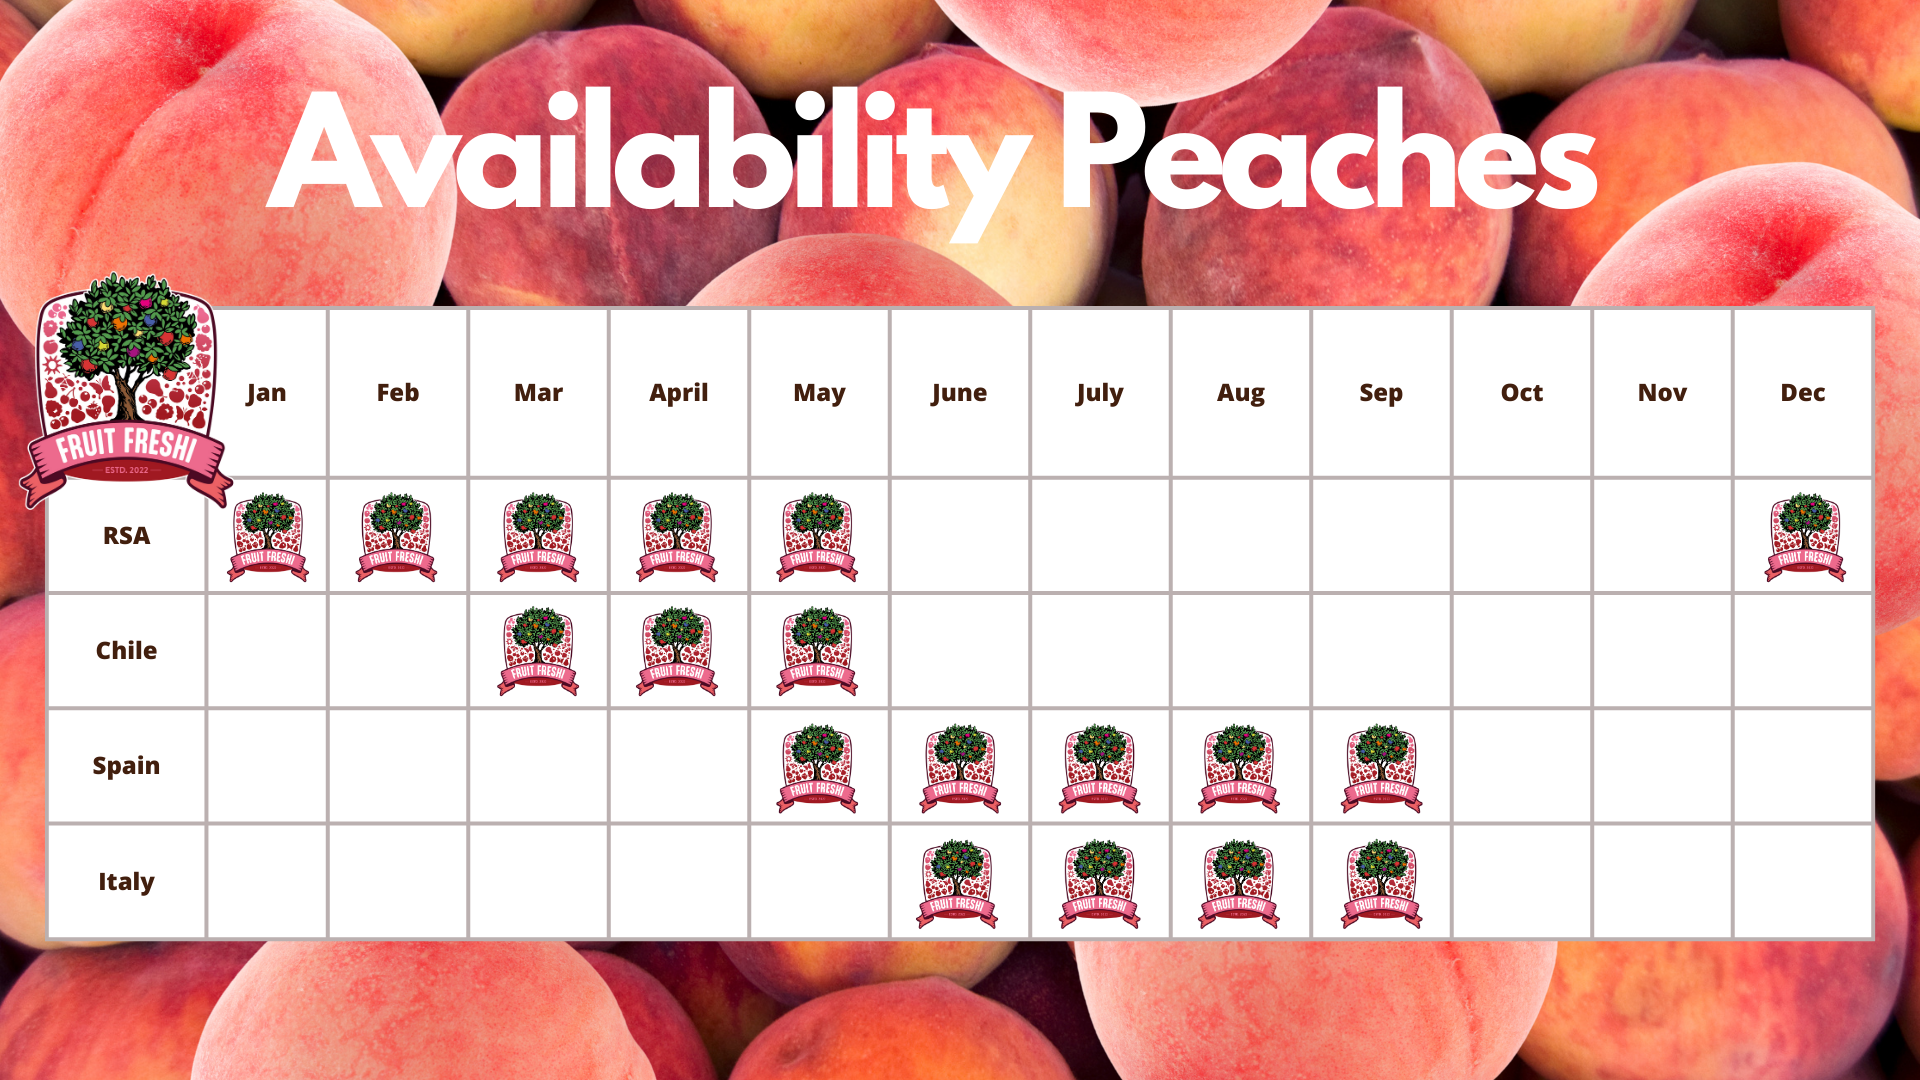 Availability Peaches Fruit Freshi